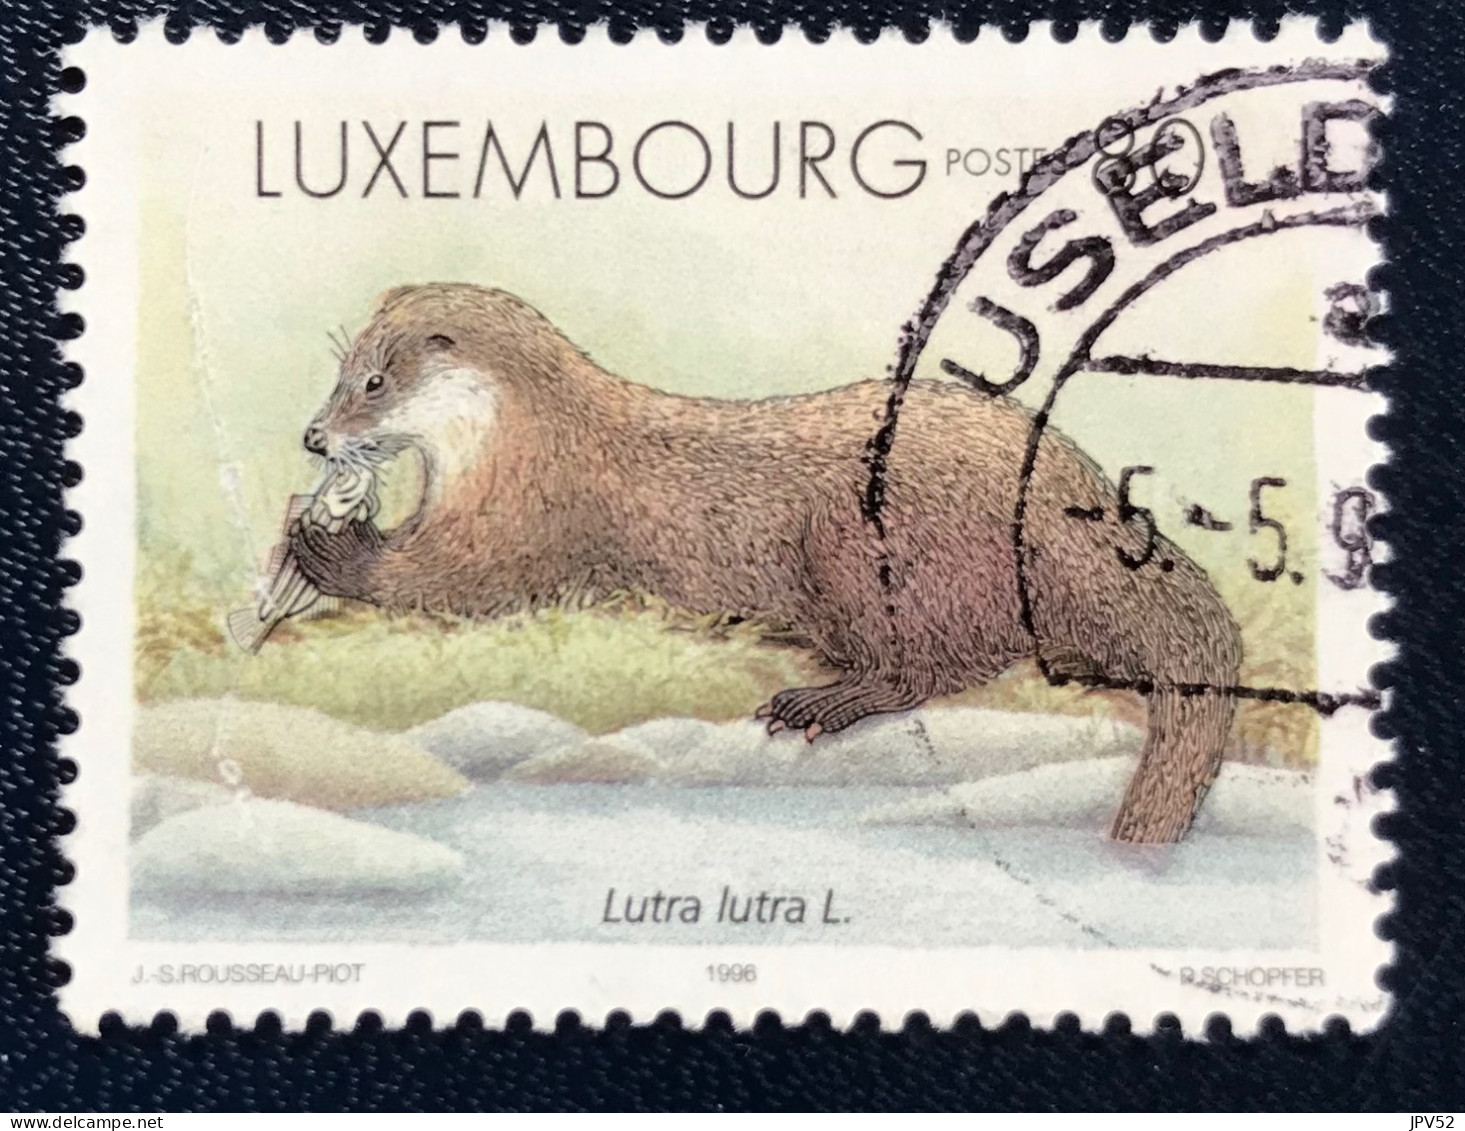 Luxembourg - Luxemburg - C18/32 - 1996 - (°)used - Michel 1402 - Pelsdieren - Usati